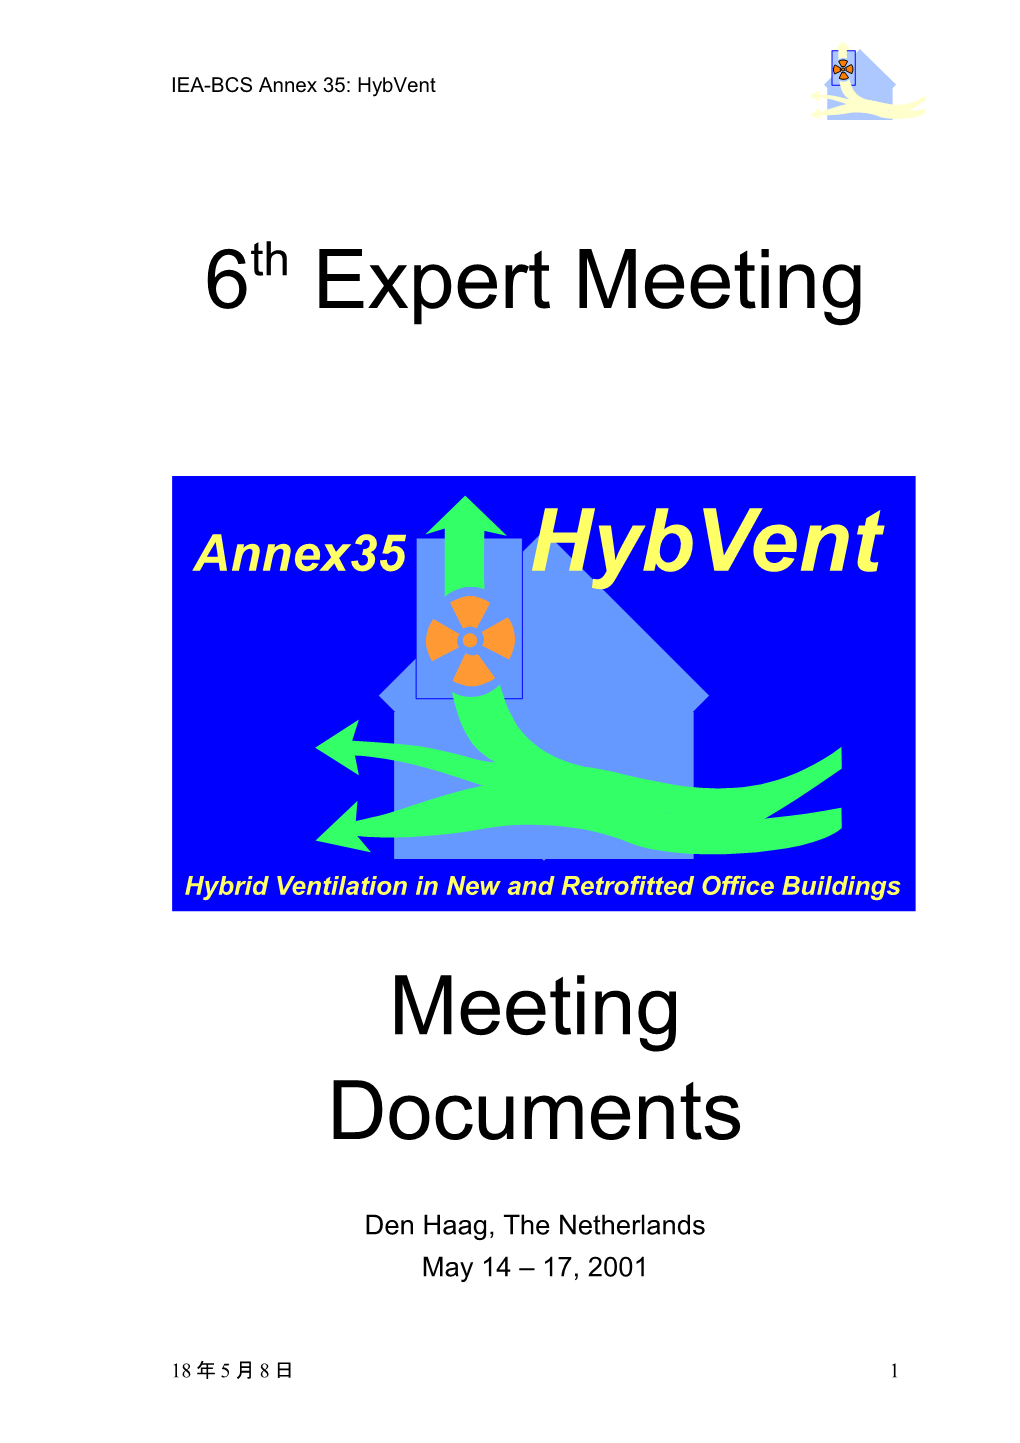 IEA-BCS Annex 35: Hybvent